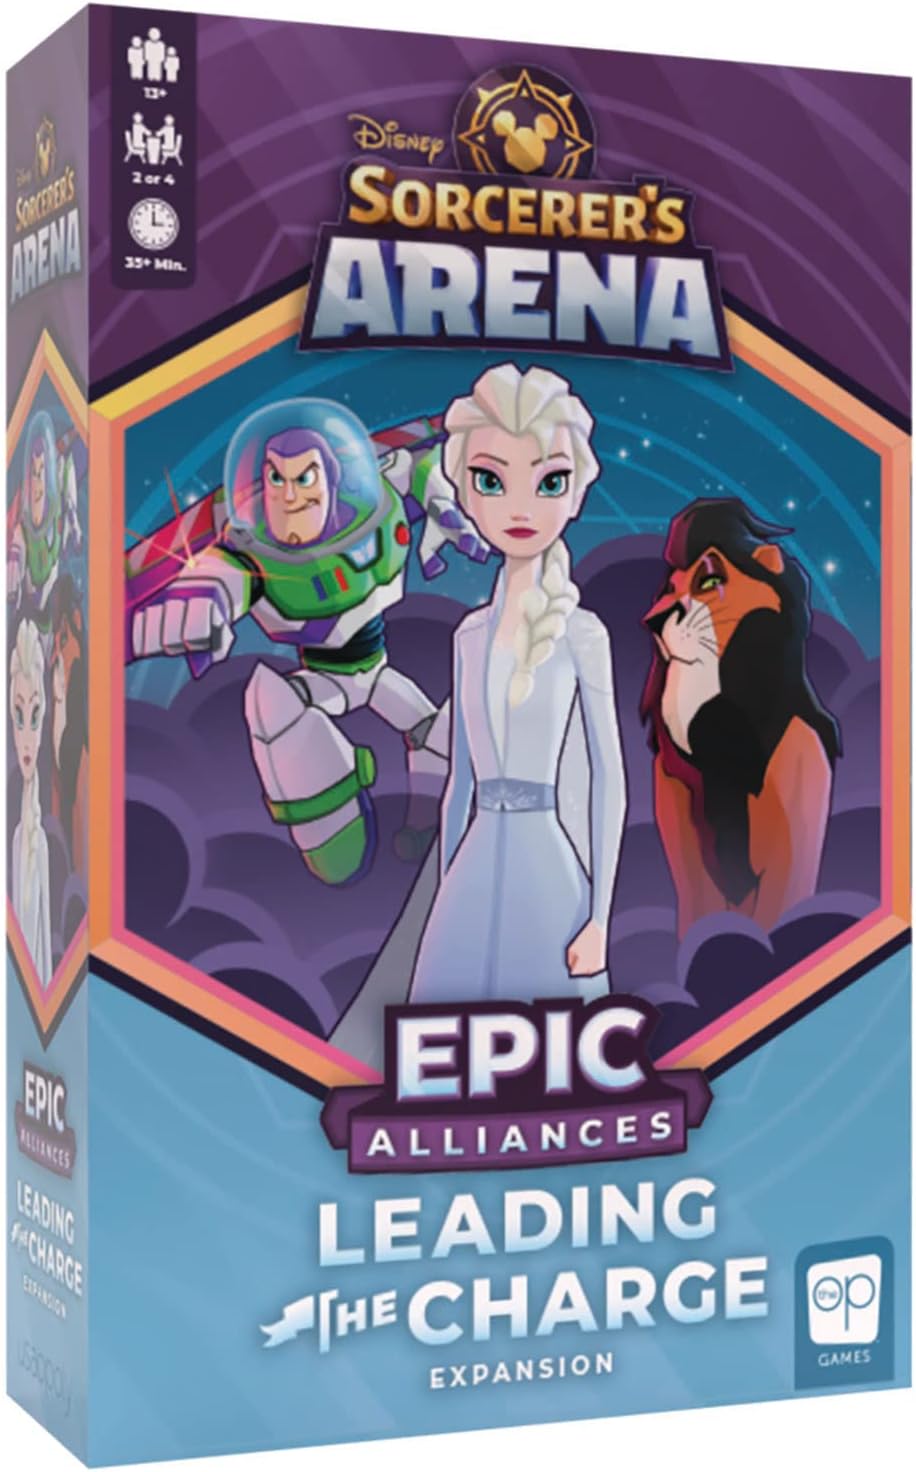 Disney Sorcerer’s Arena: Epic Alliances: Leading The Charge Expansion